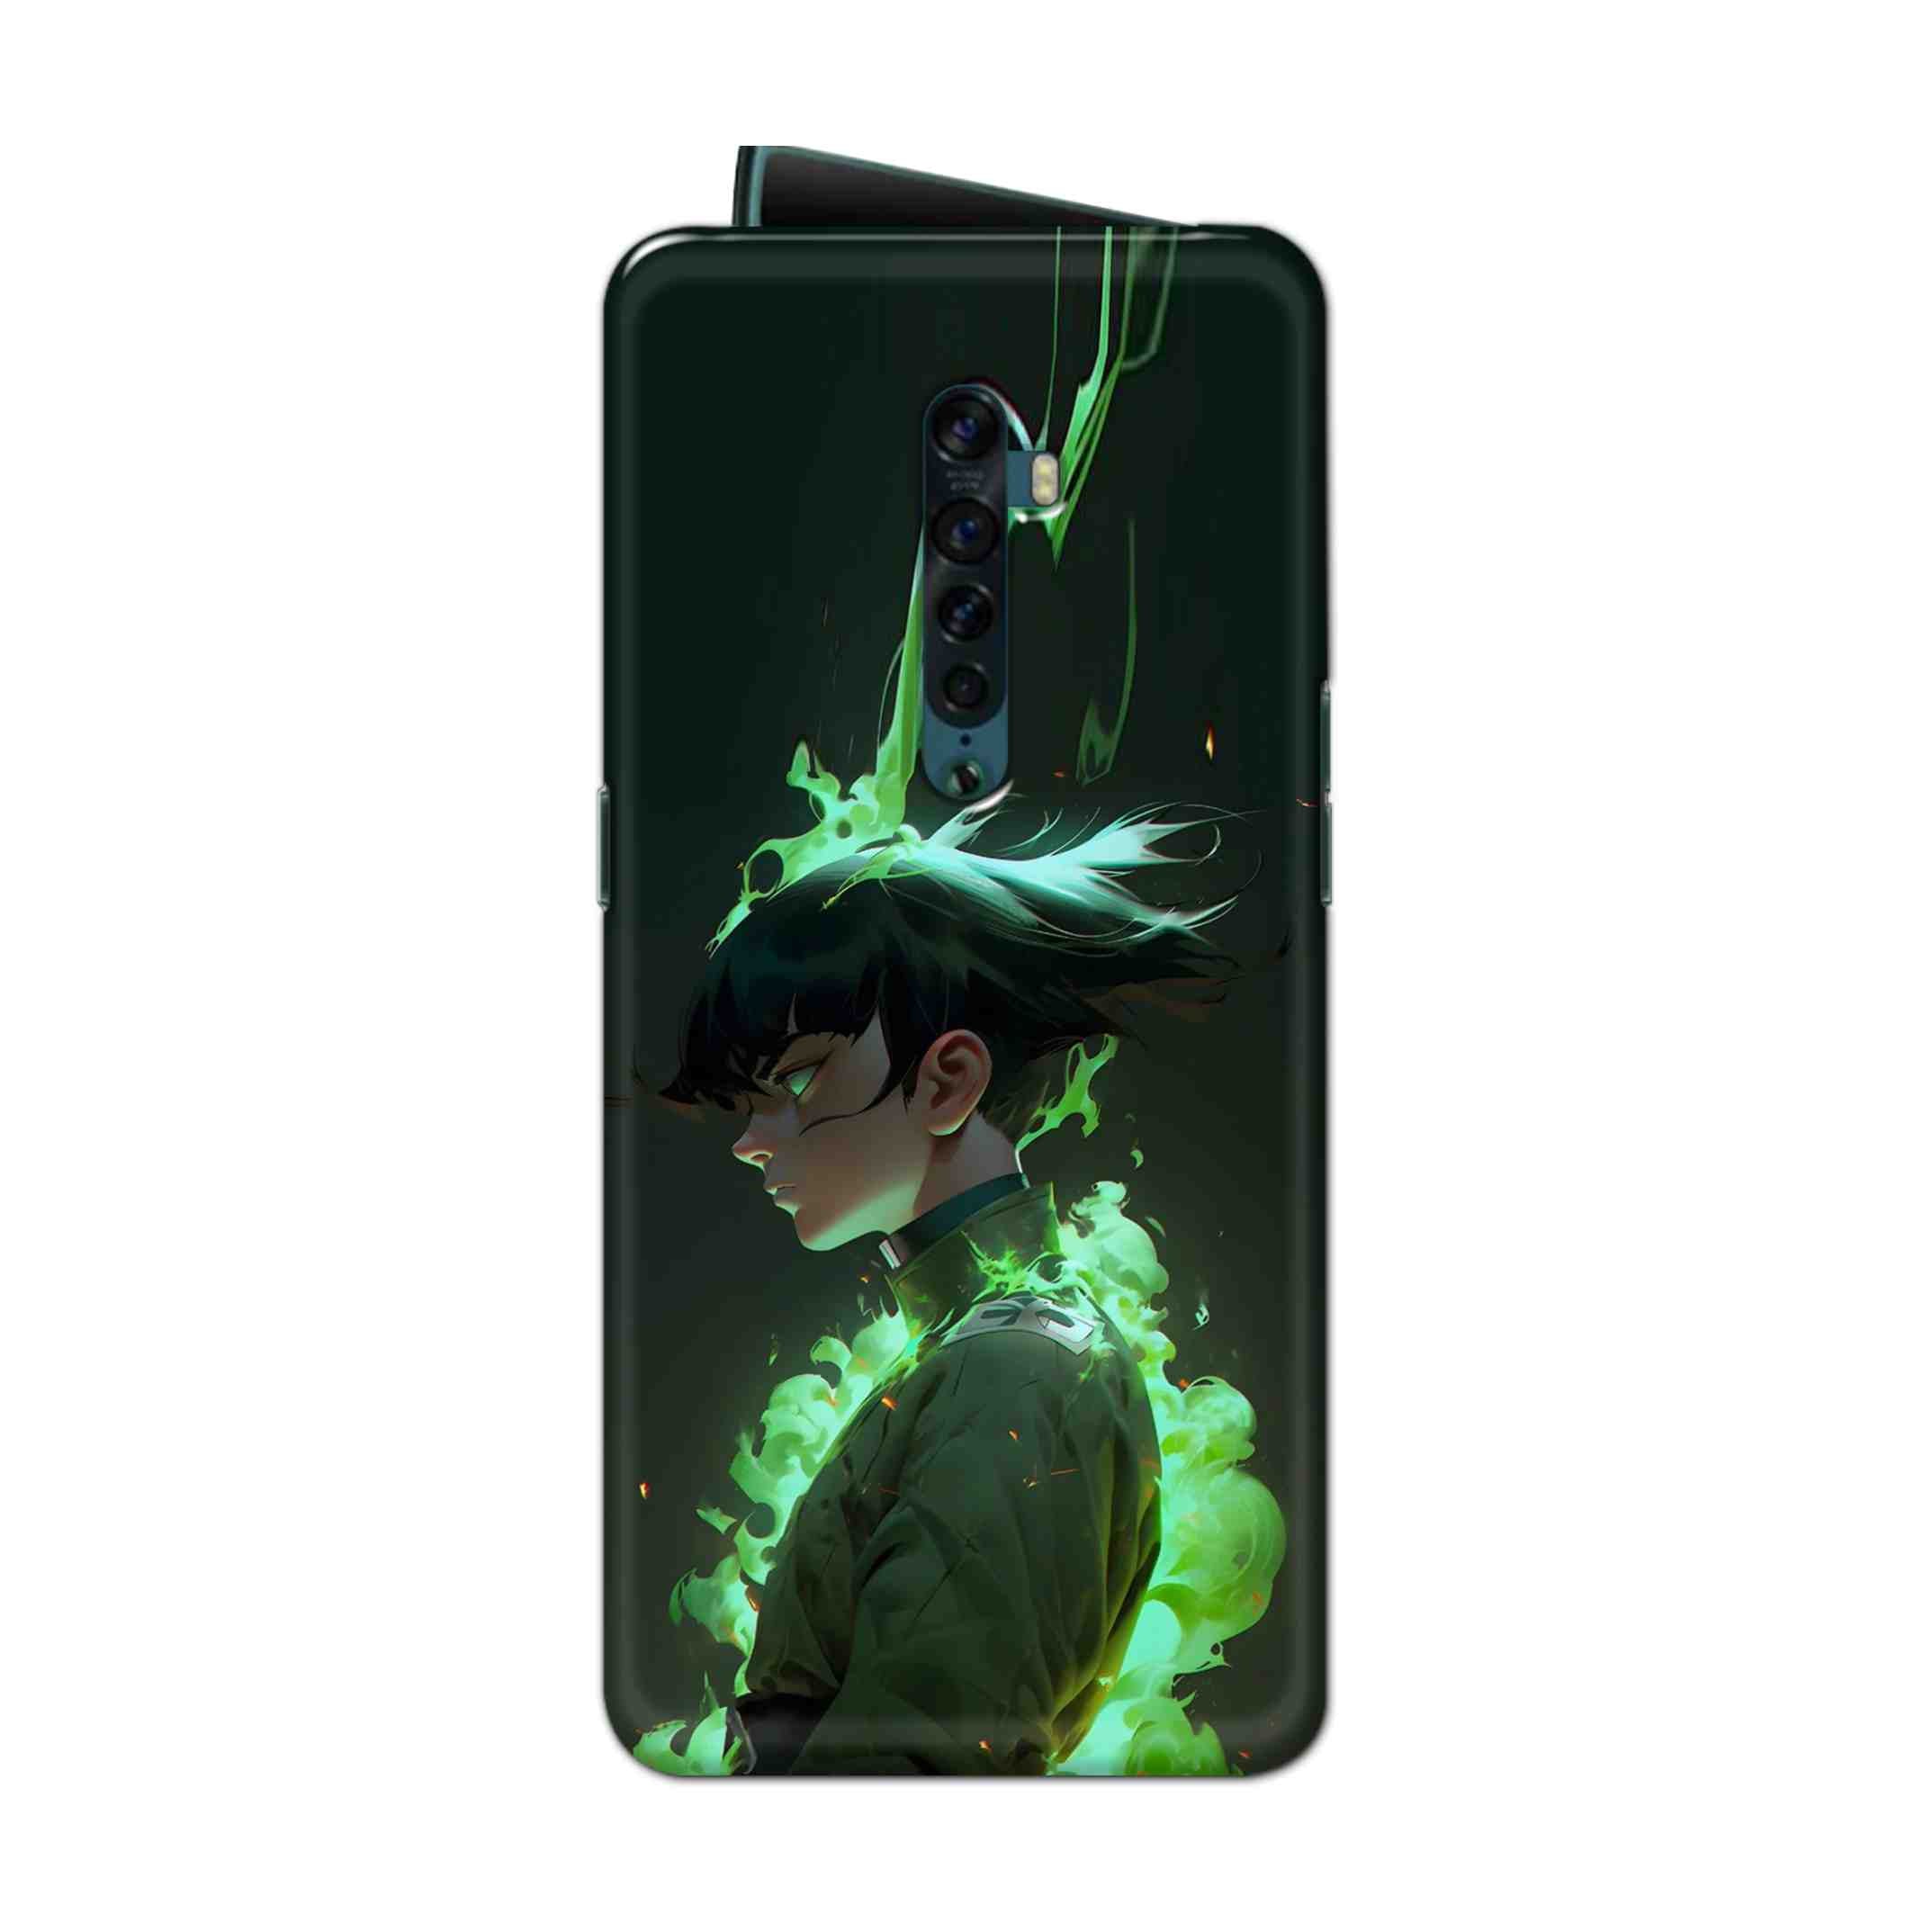 Buy Akira Hard Back Mobile Phone Case Cover For Oppo Reno 2 Online